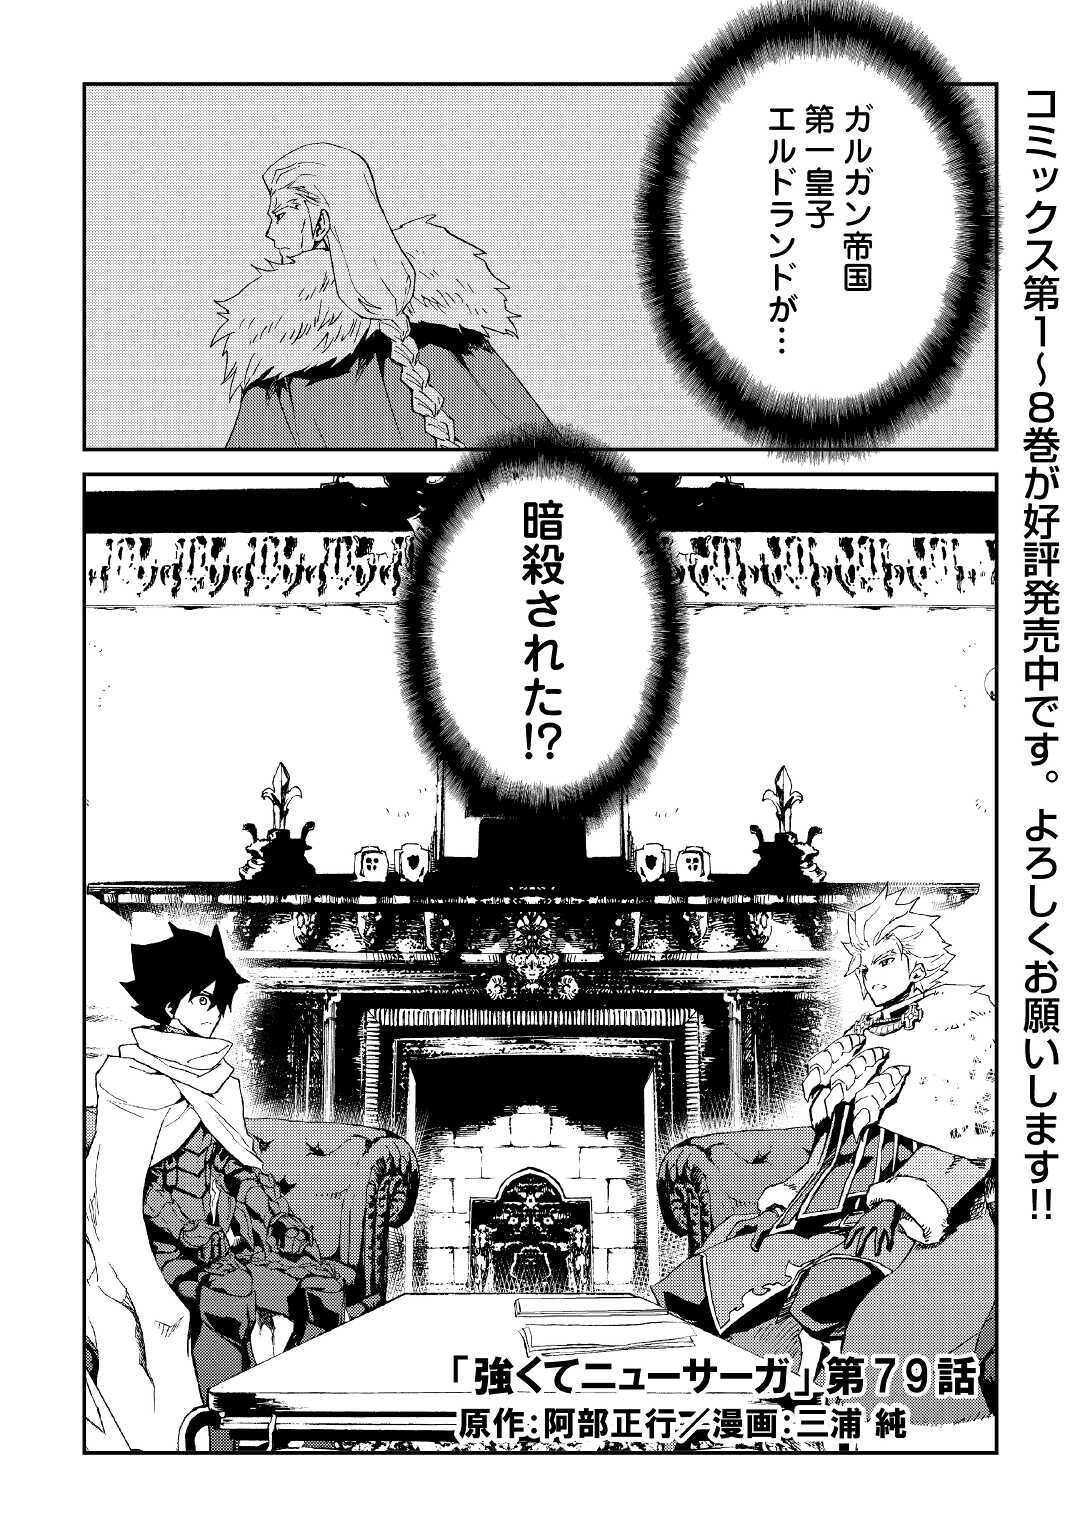 Tsuyokute New Saga - Chapter 79 - Page 1